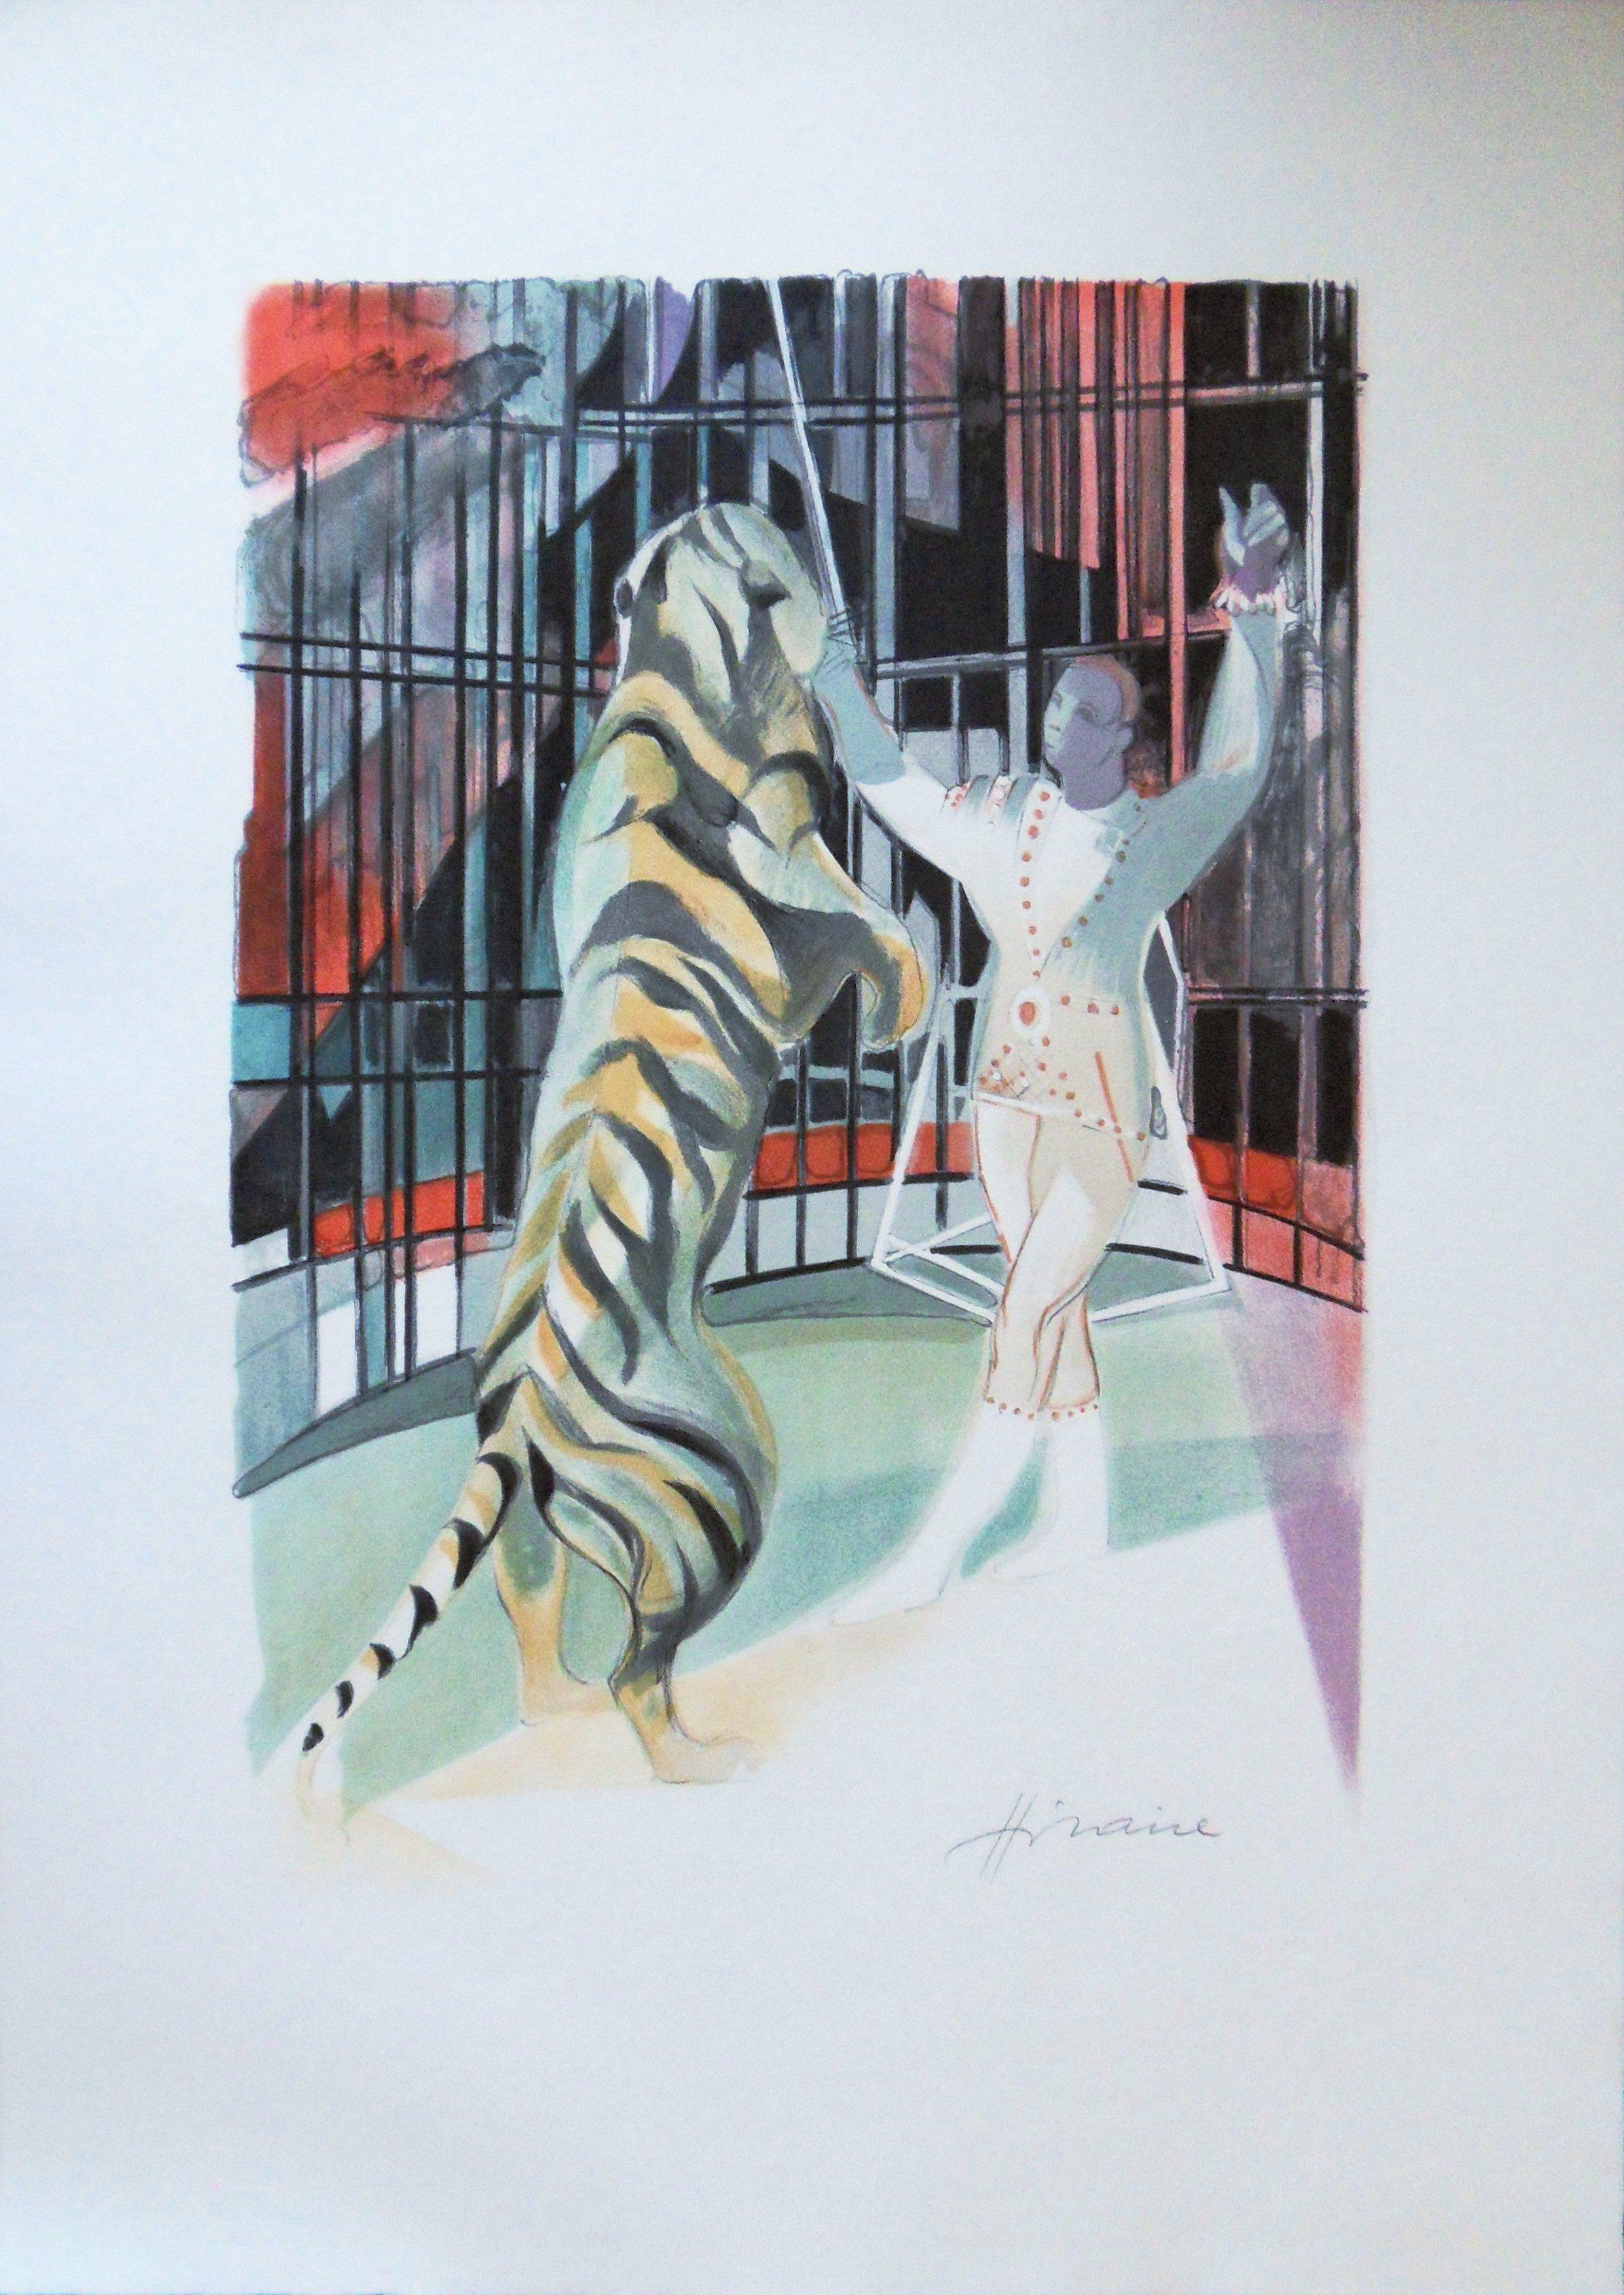 Circus : Tiger on Scene - Original handsigned lithograph